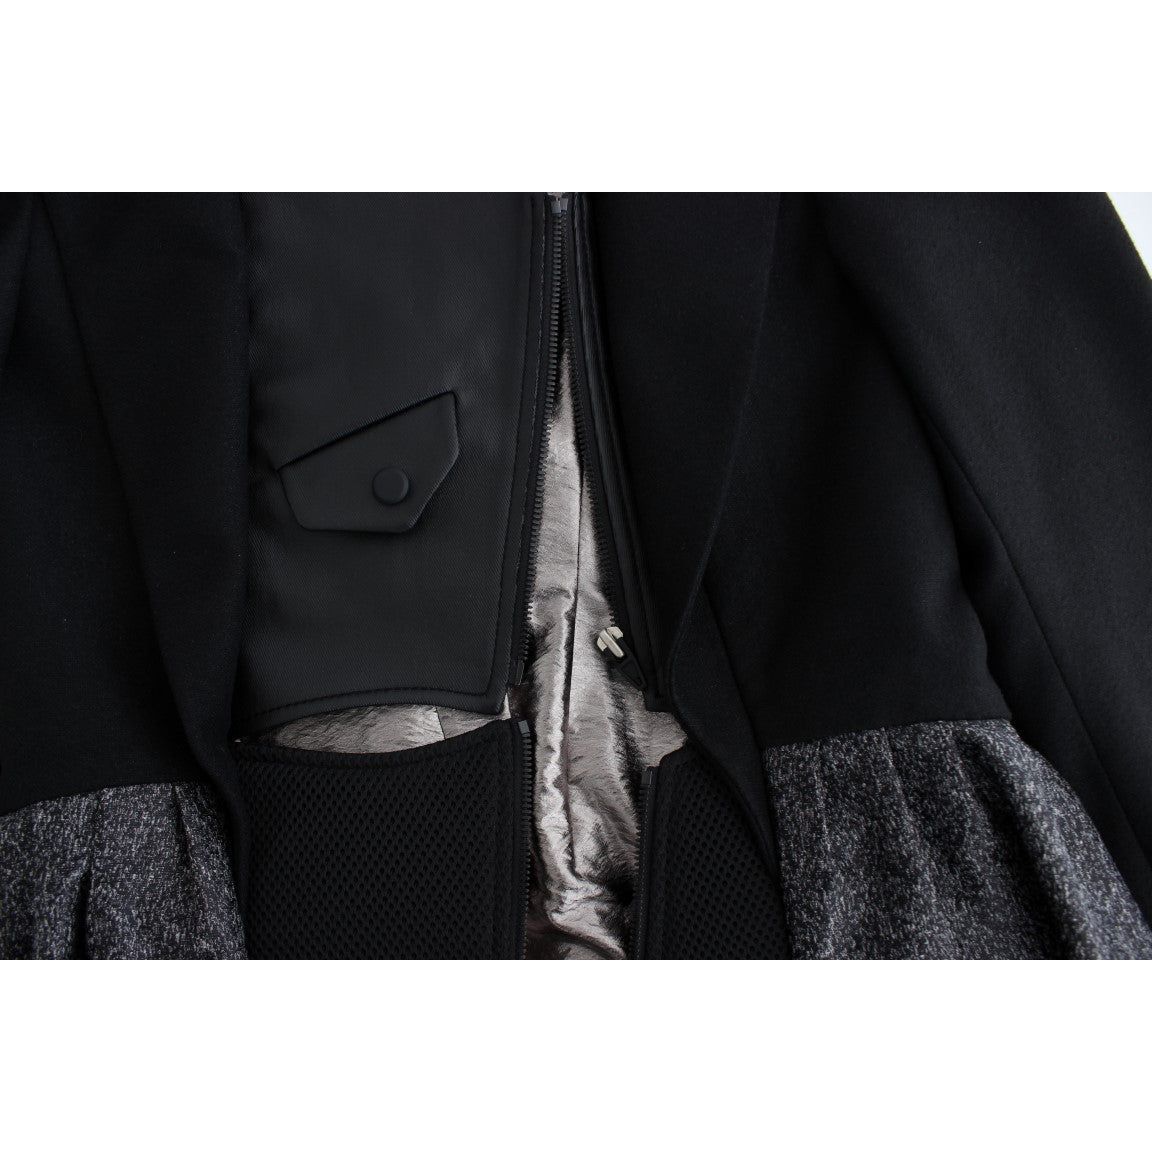 KAALE SUKTAE | Black Short Blazer Coat Biker Jacket | McRichard Designer Brands